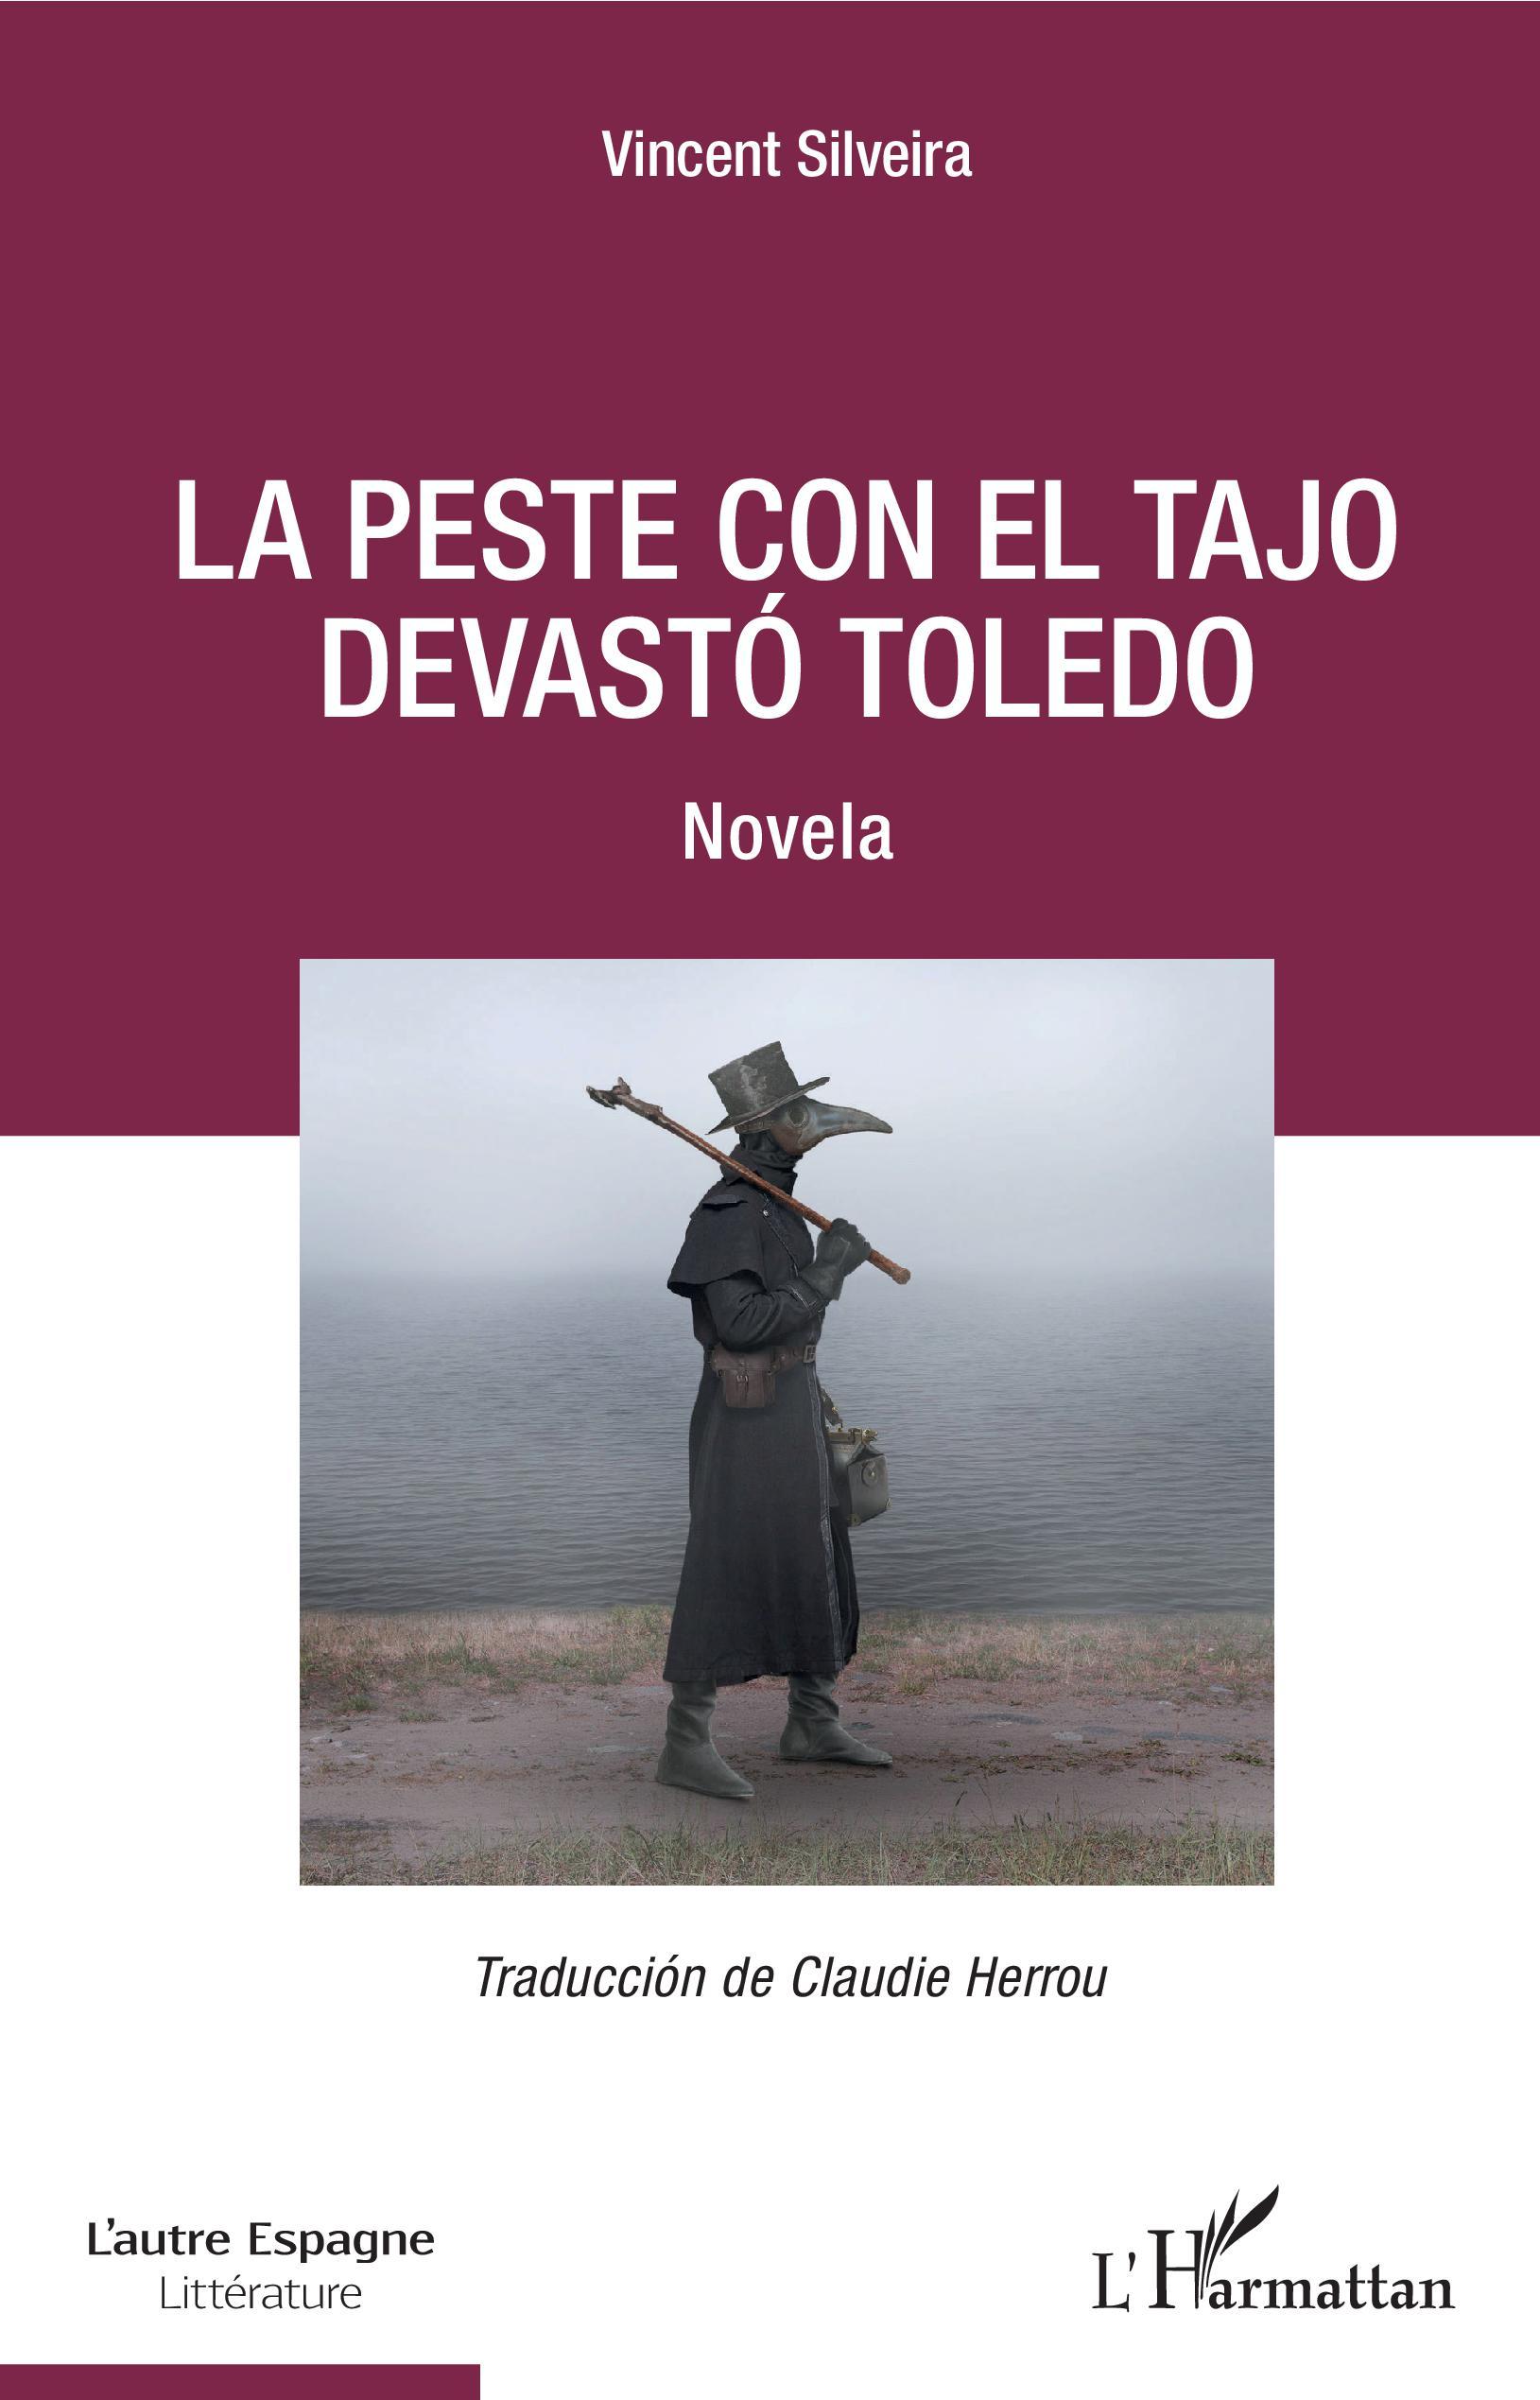 La peste con el Tajo devastó Toledo, Novela (9782343207087-front-cover)